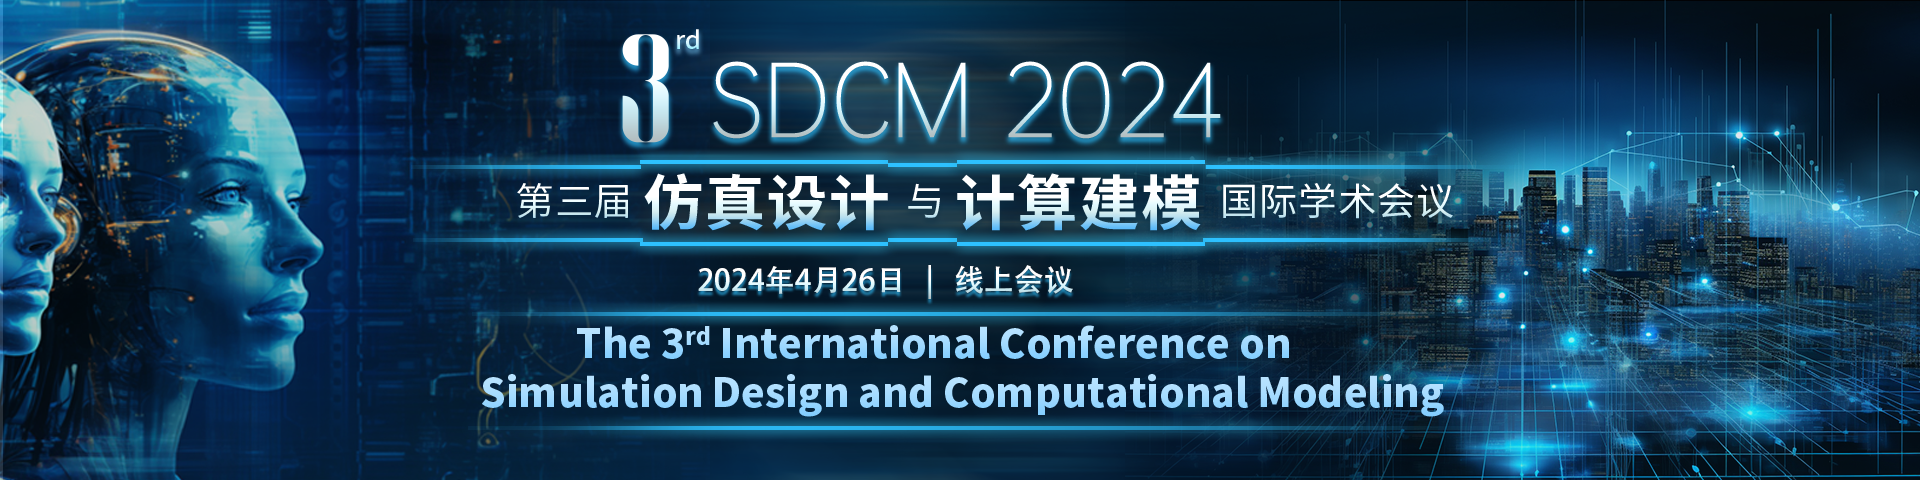 SDCM-1920x480-中文.png